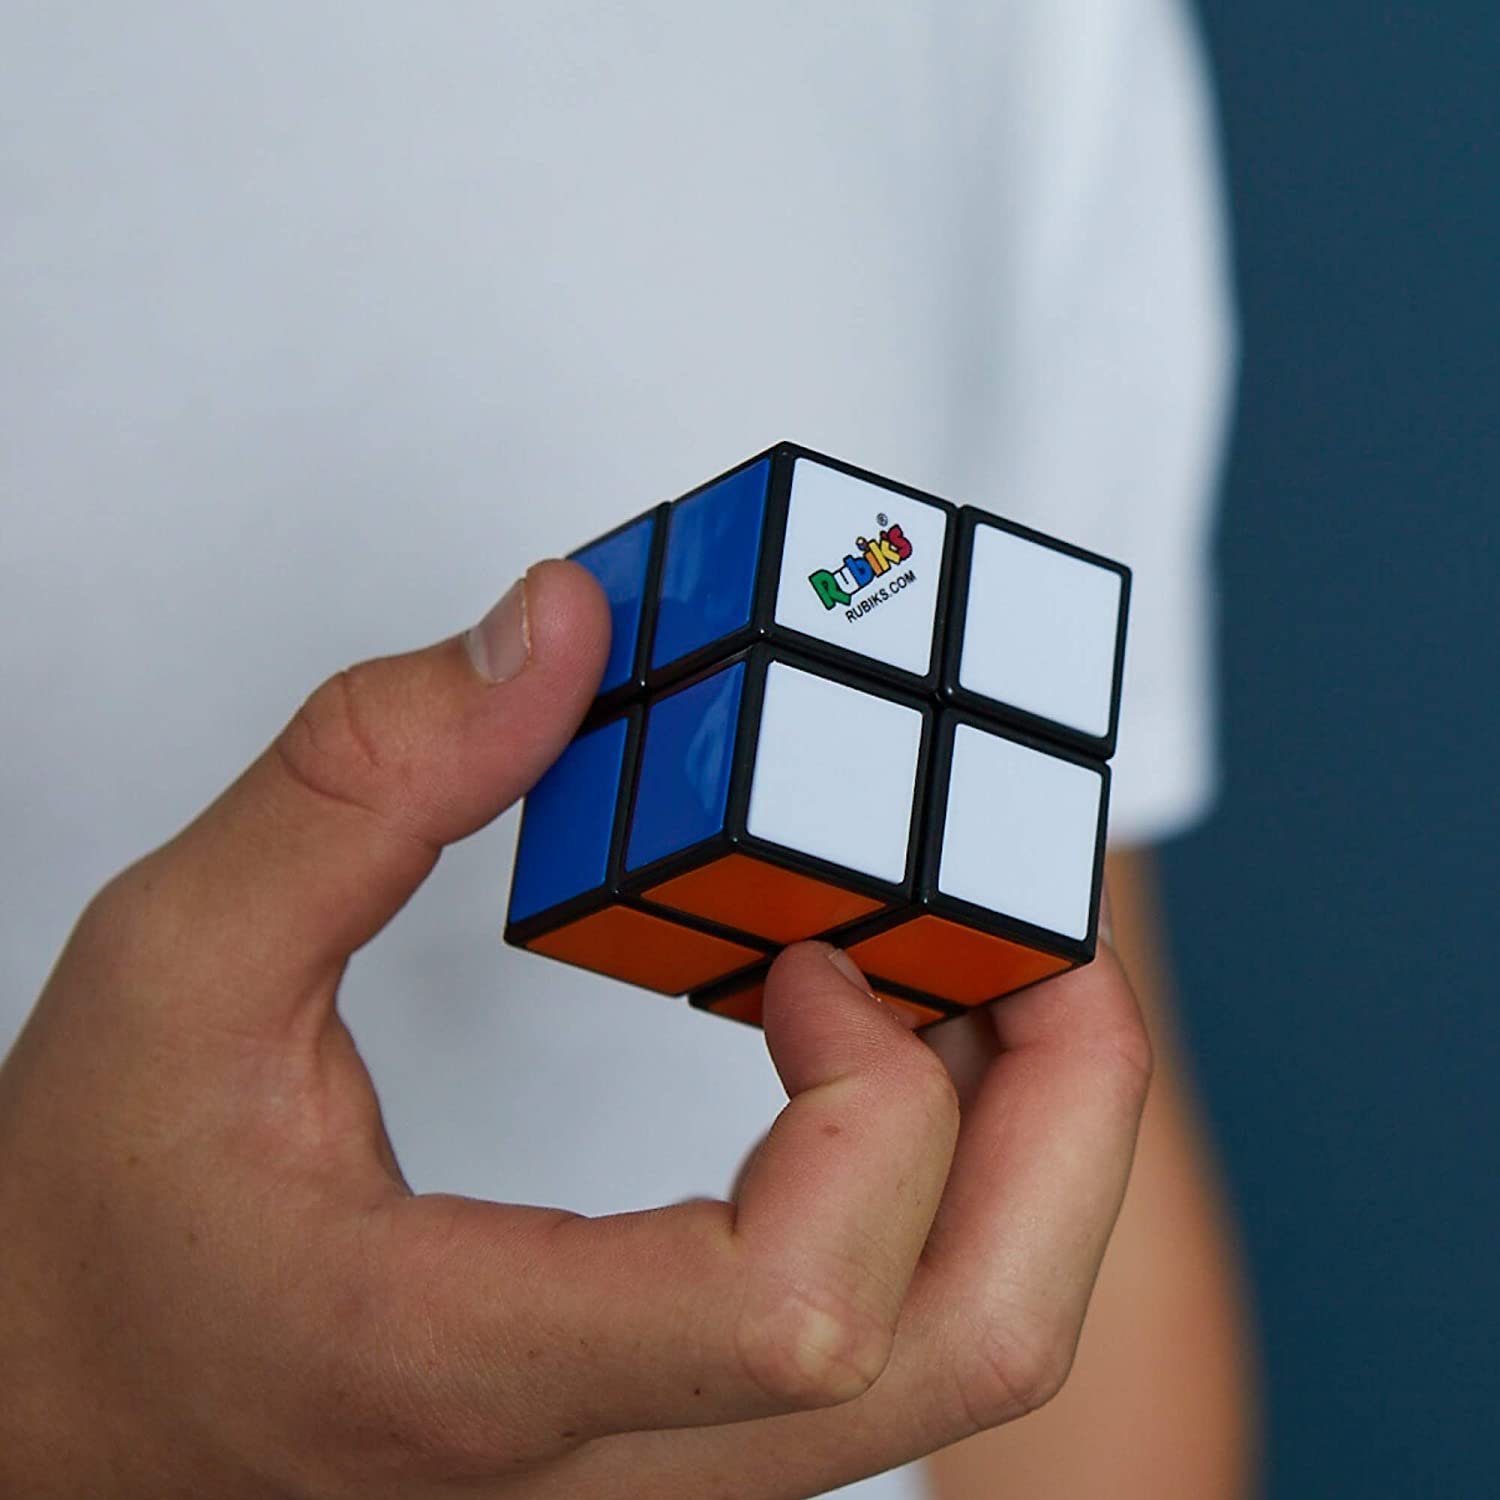 Würfel x einzig 2 Rubik´s der Rubik´s wahre Original Zauber Beginner Zauberwürfel Spiel, 2 Cube